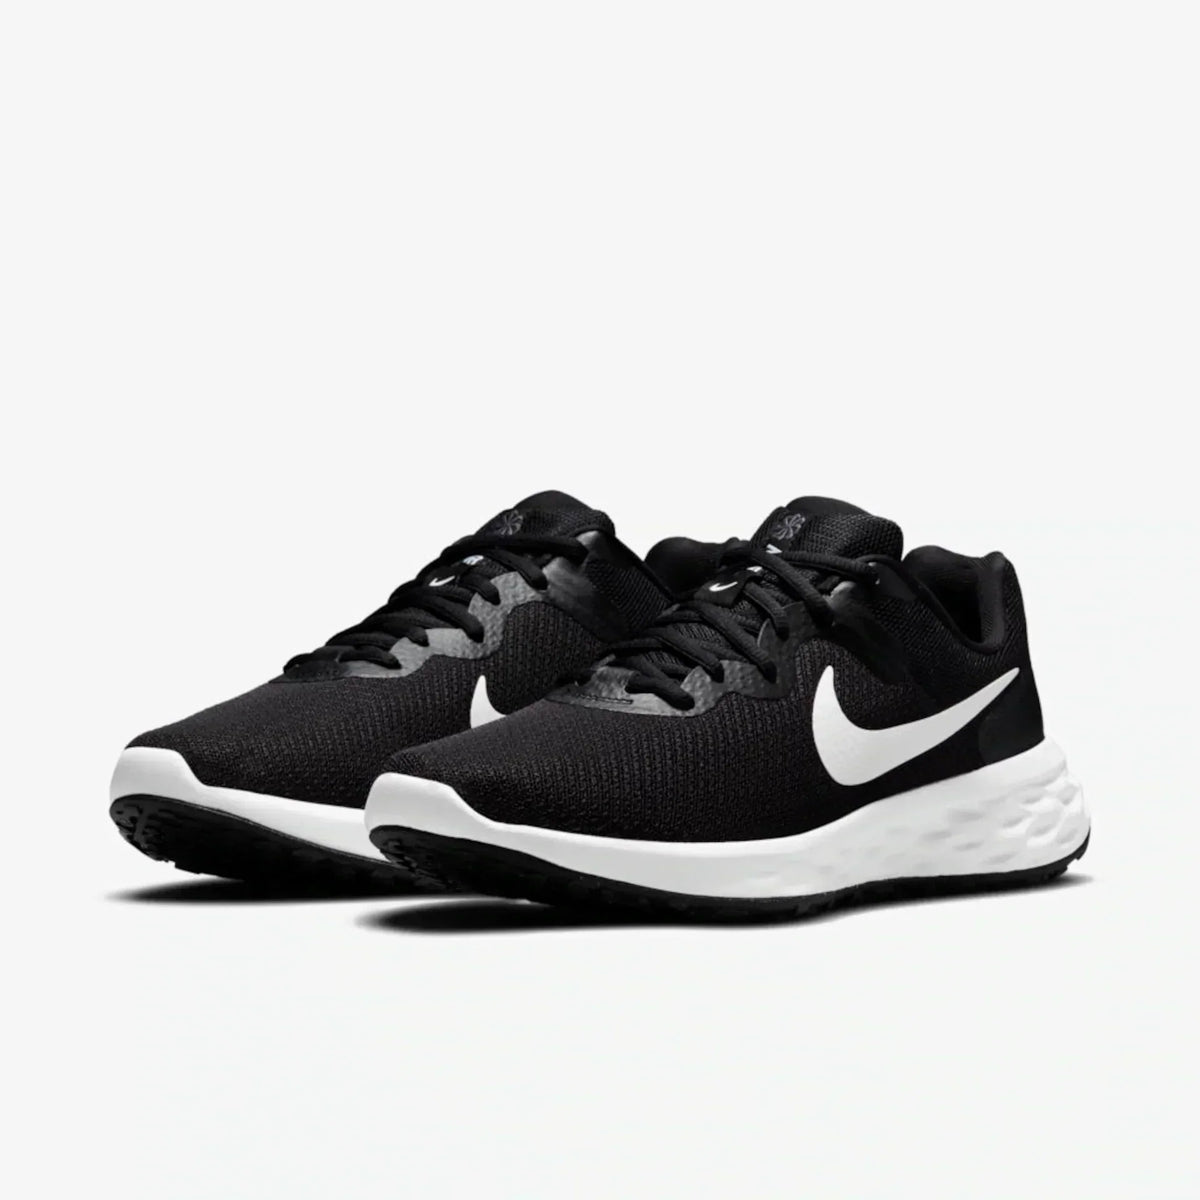 Tênis Nike Revolution 6